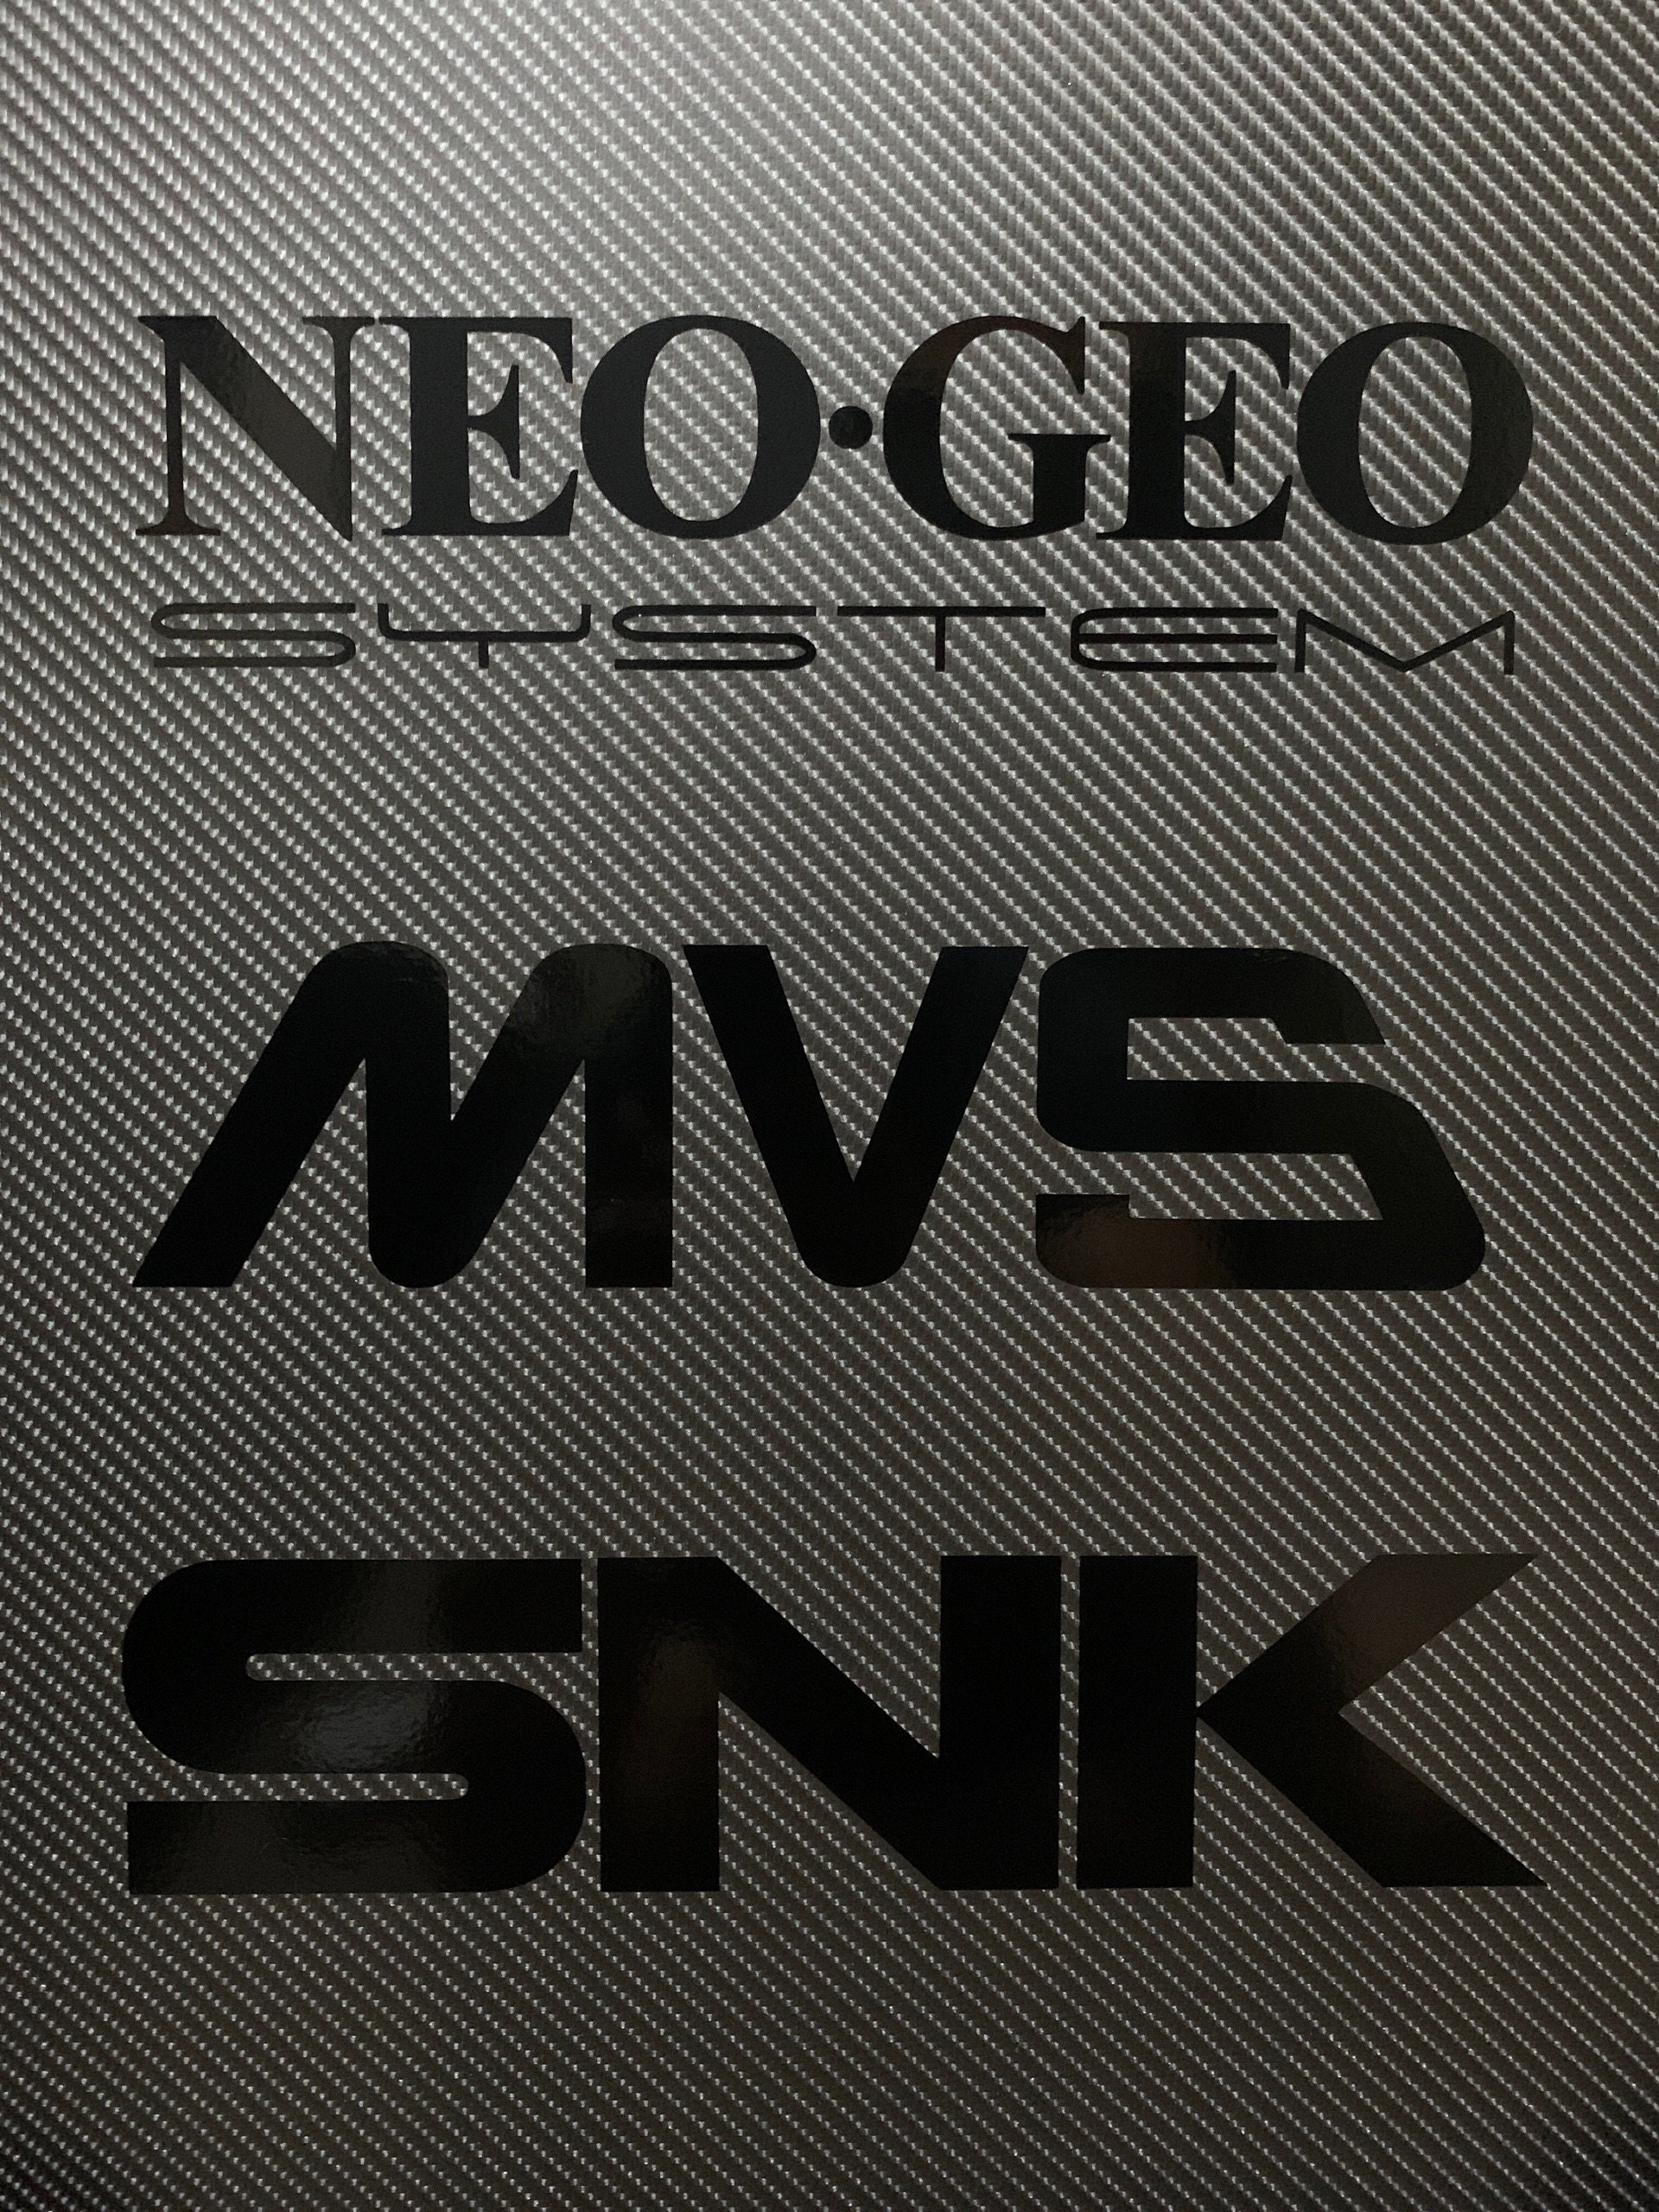 Arcade cabinet sides Vinyl Decal NeoGeo MVS SNK kit N1 *Read description* 